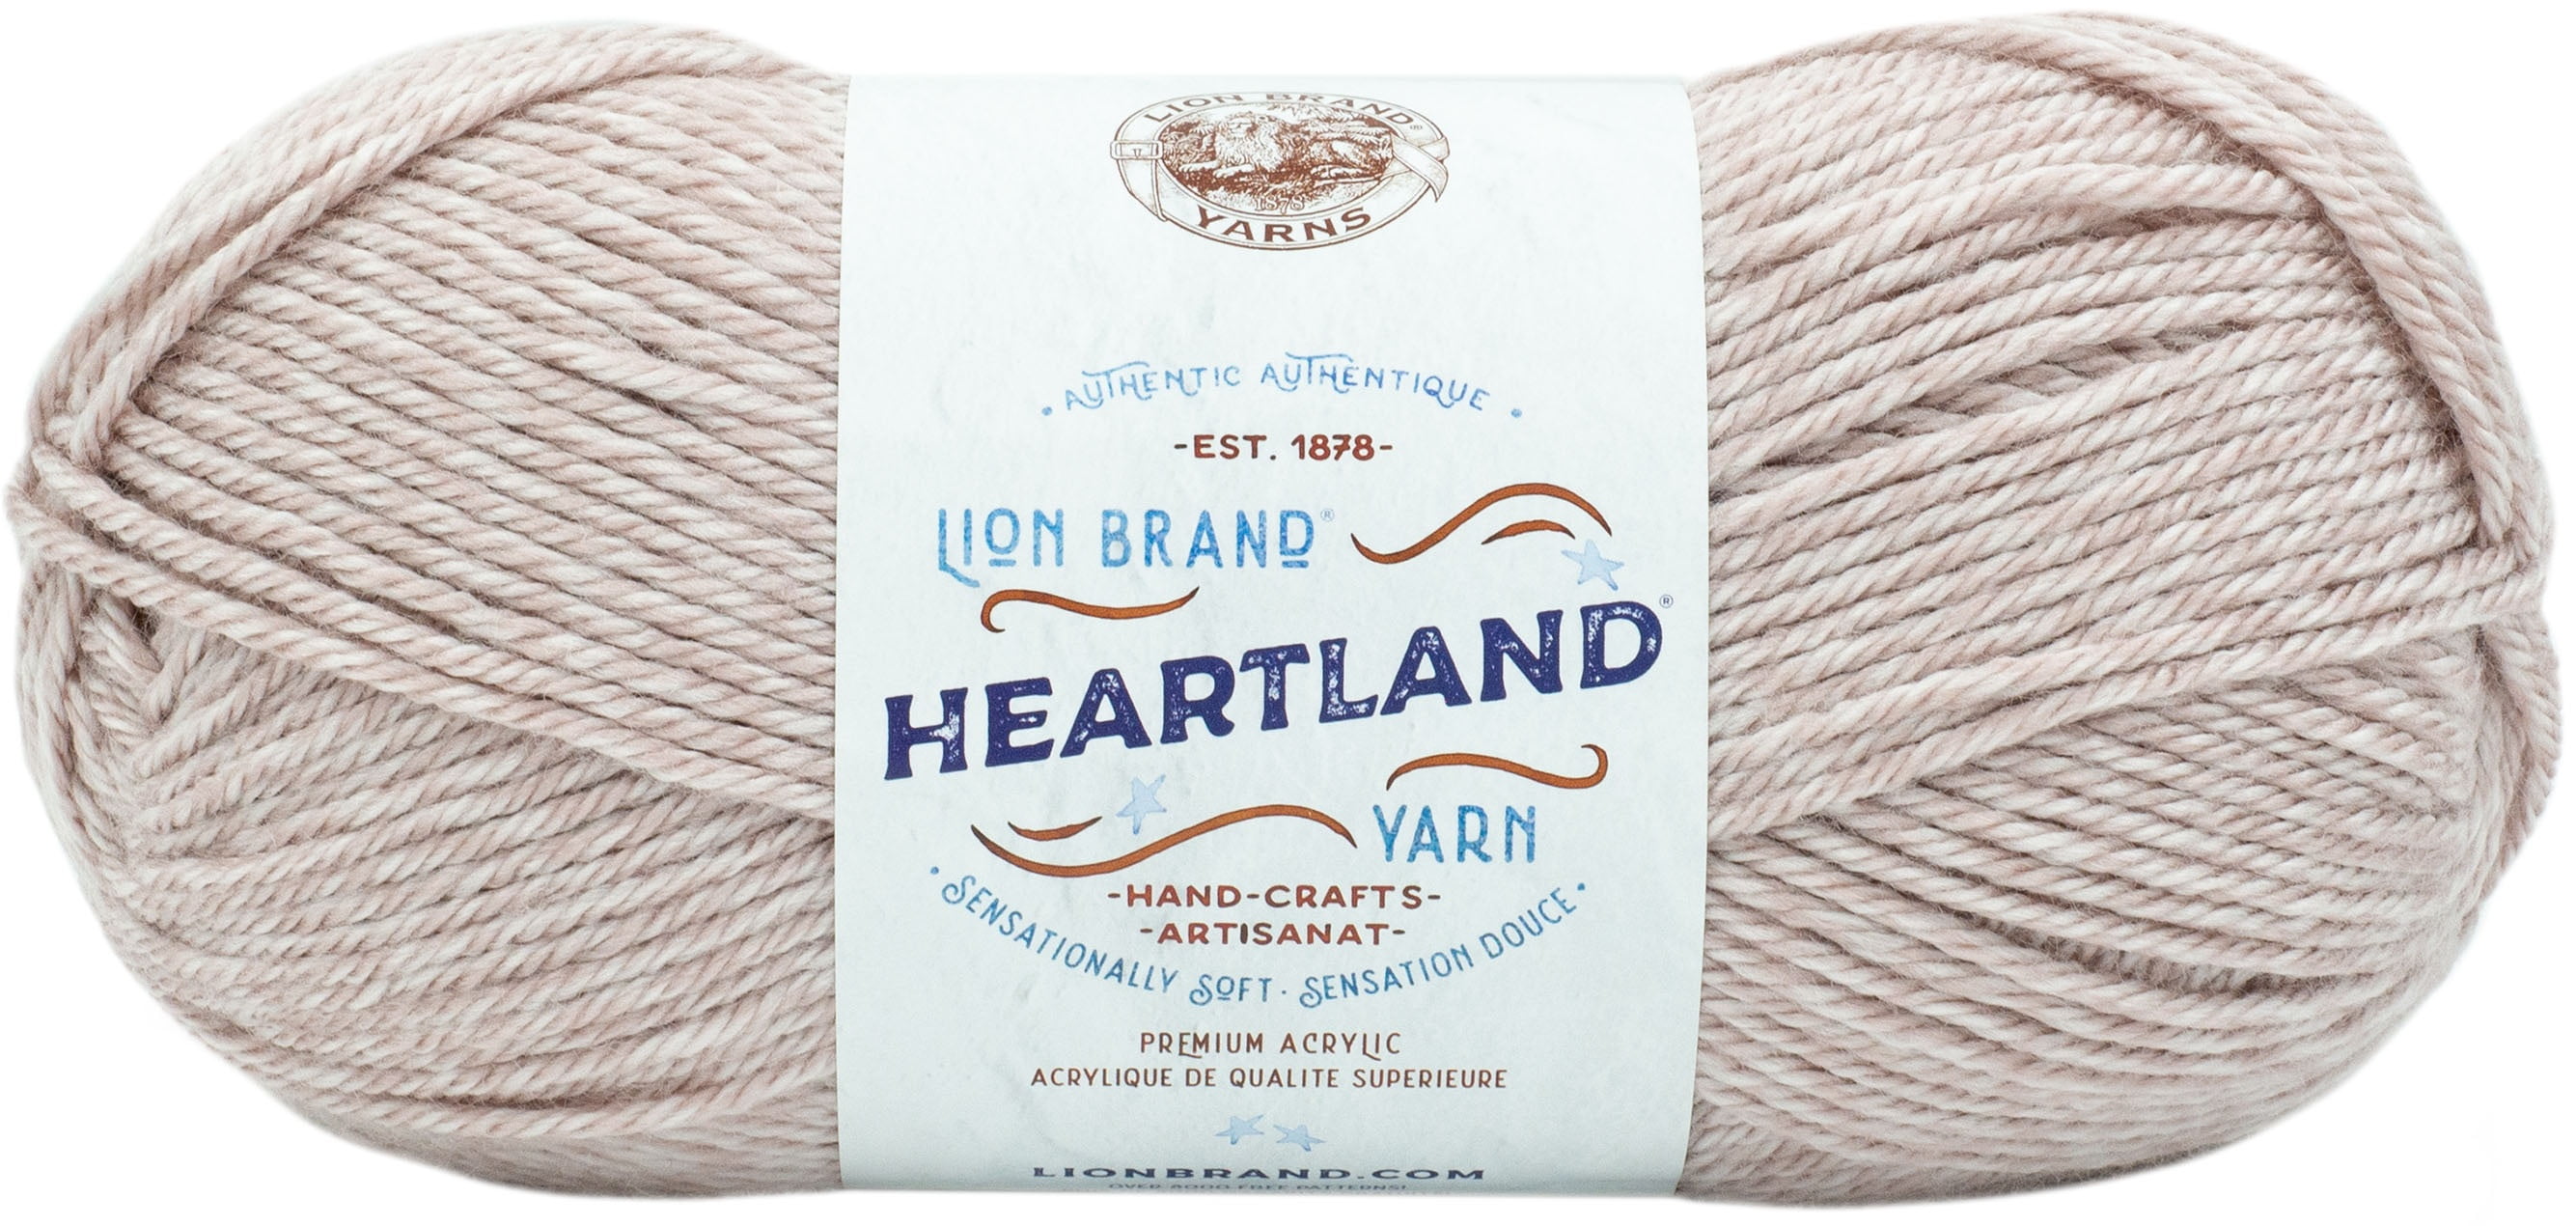 Lion Brand Heartland Yarn - Mammoth Cave